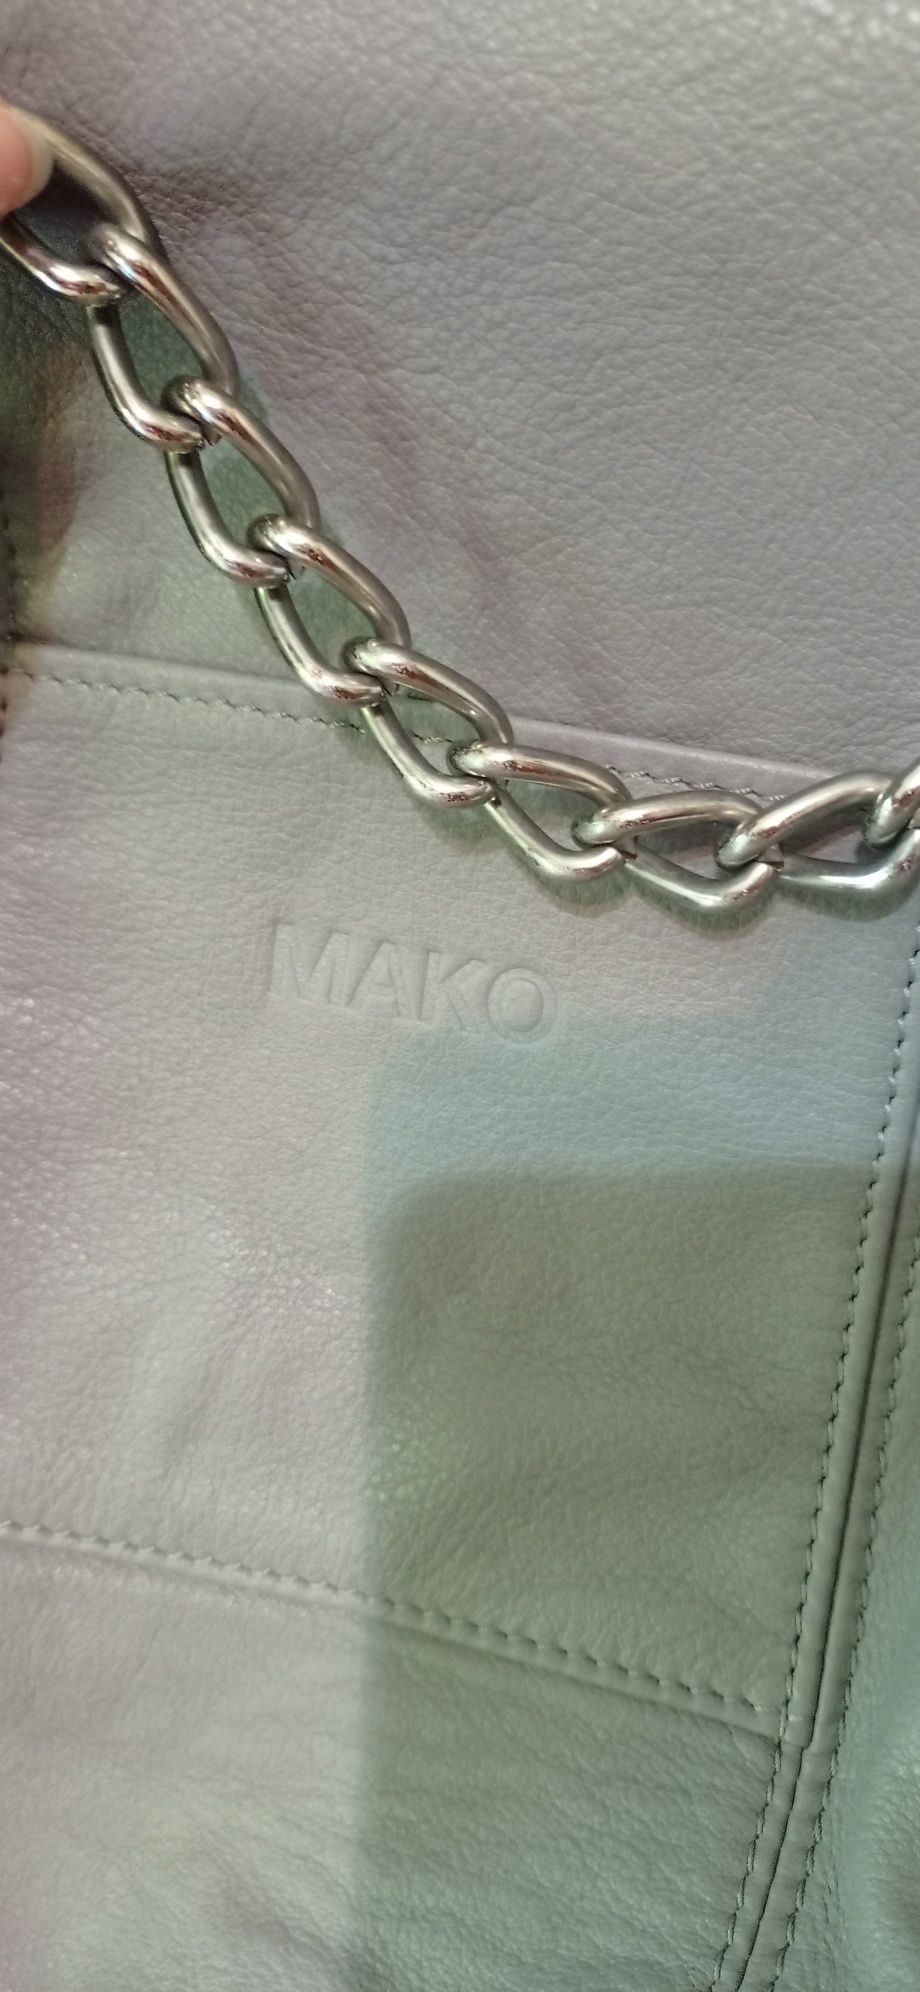 Szara skórzana torebka Mako